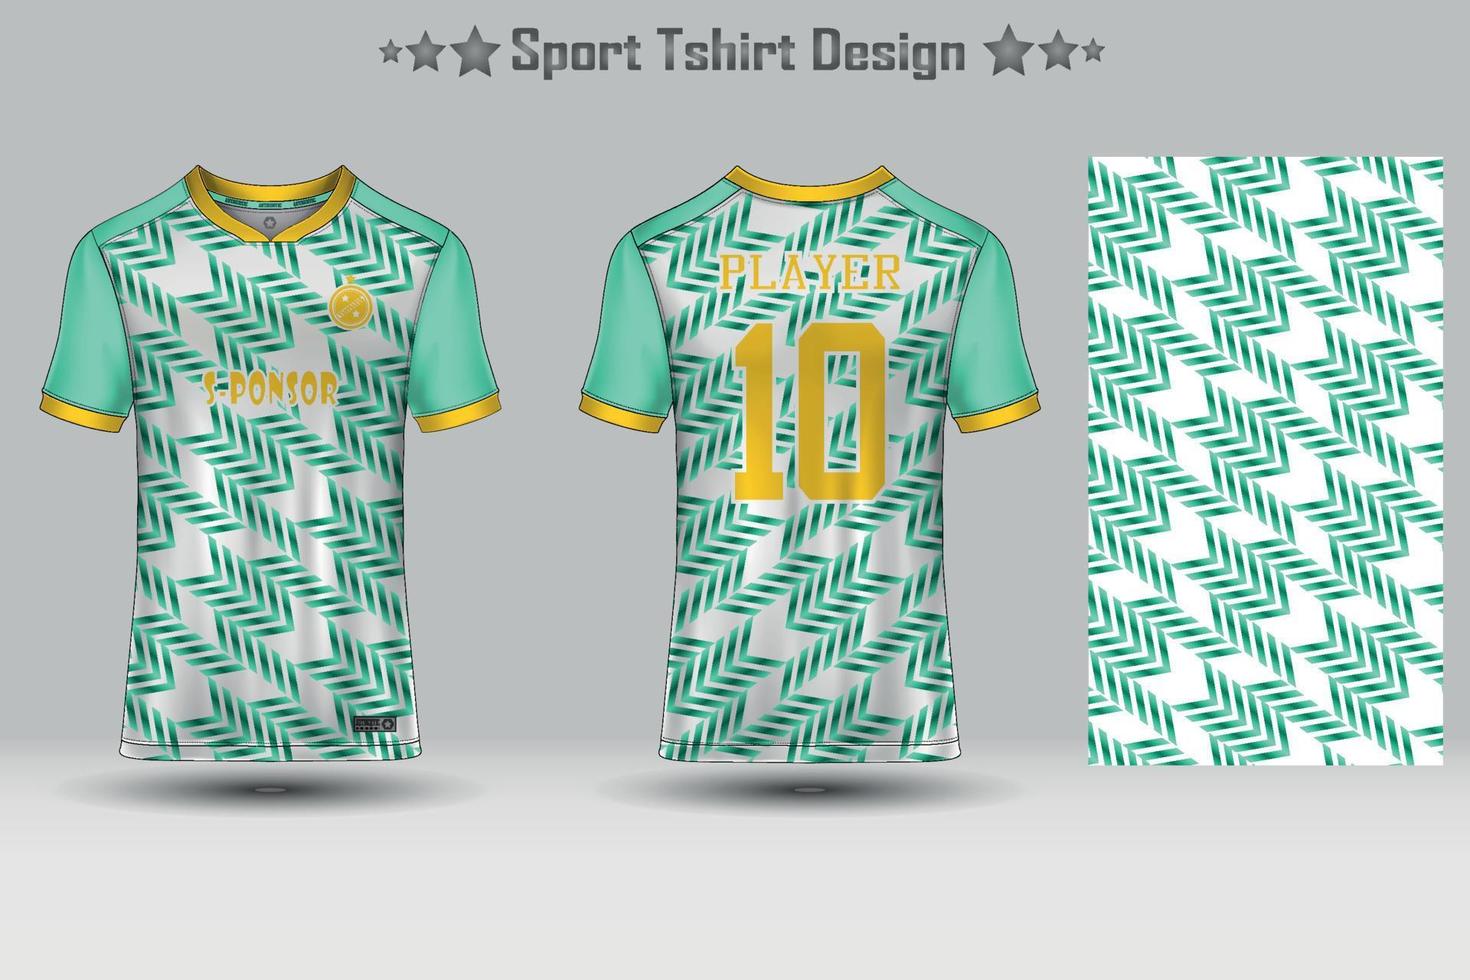 Fußballsport Jersey Mockup abstraktes geometrisches Muster T-Shirt Design vektor